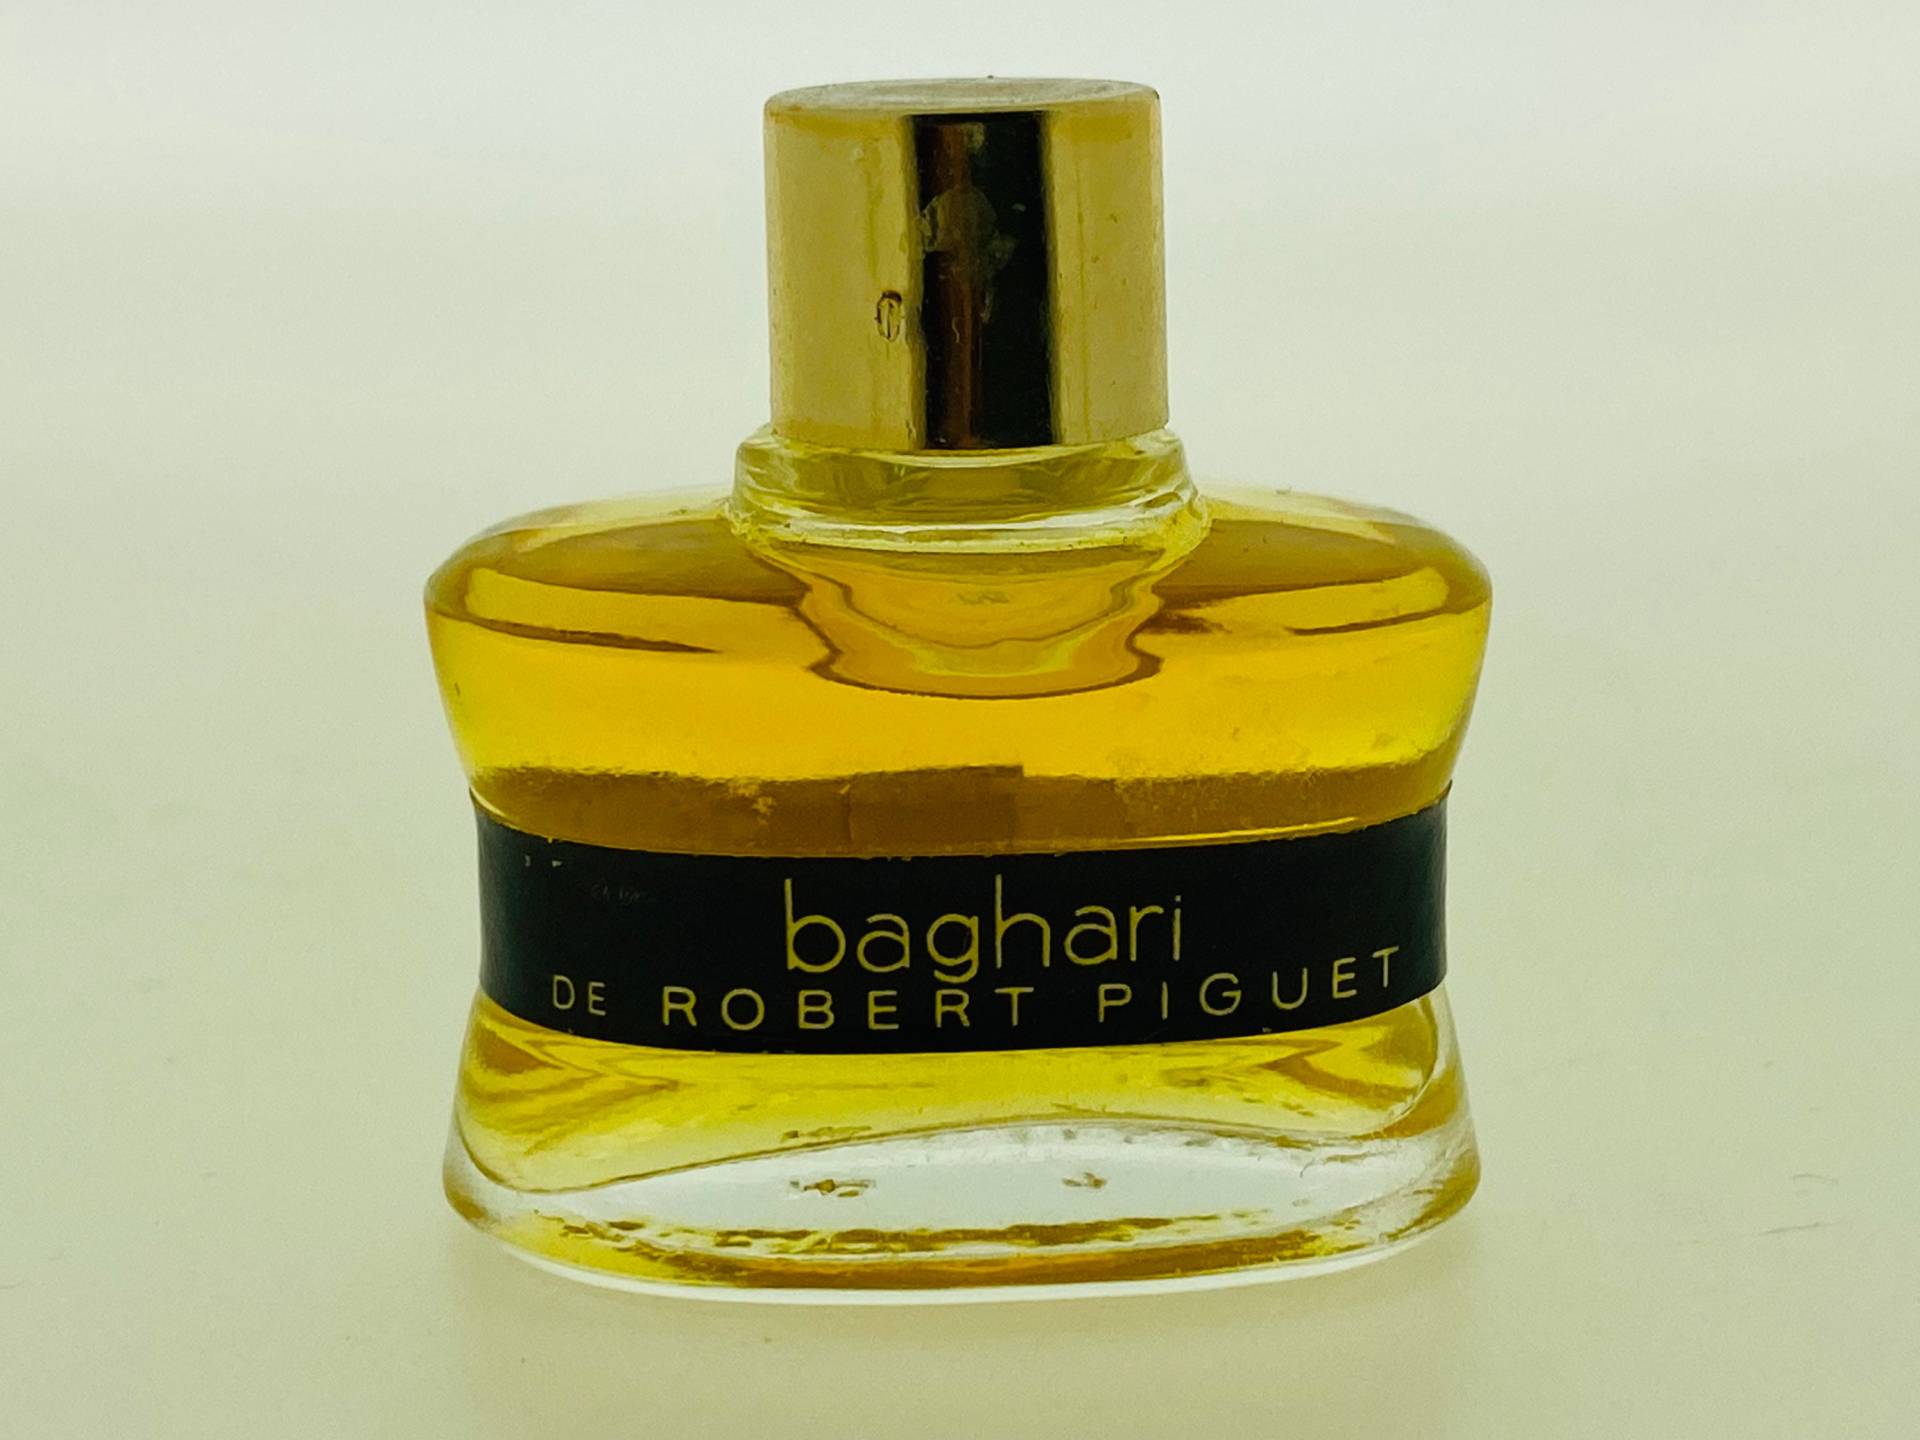 Baghari Robert Piguet 1950 Parfum Miniatur 4 Ml von Etsy - VintagePerfumeShop